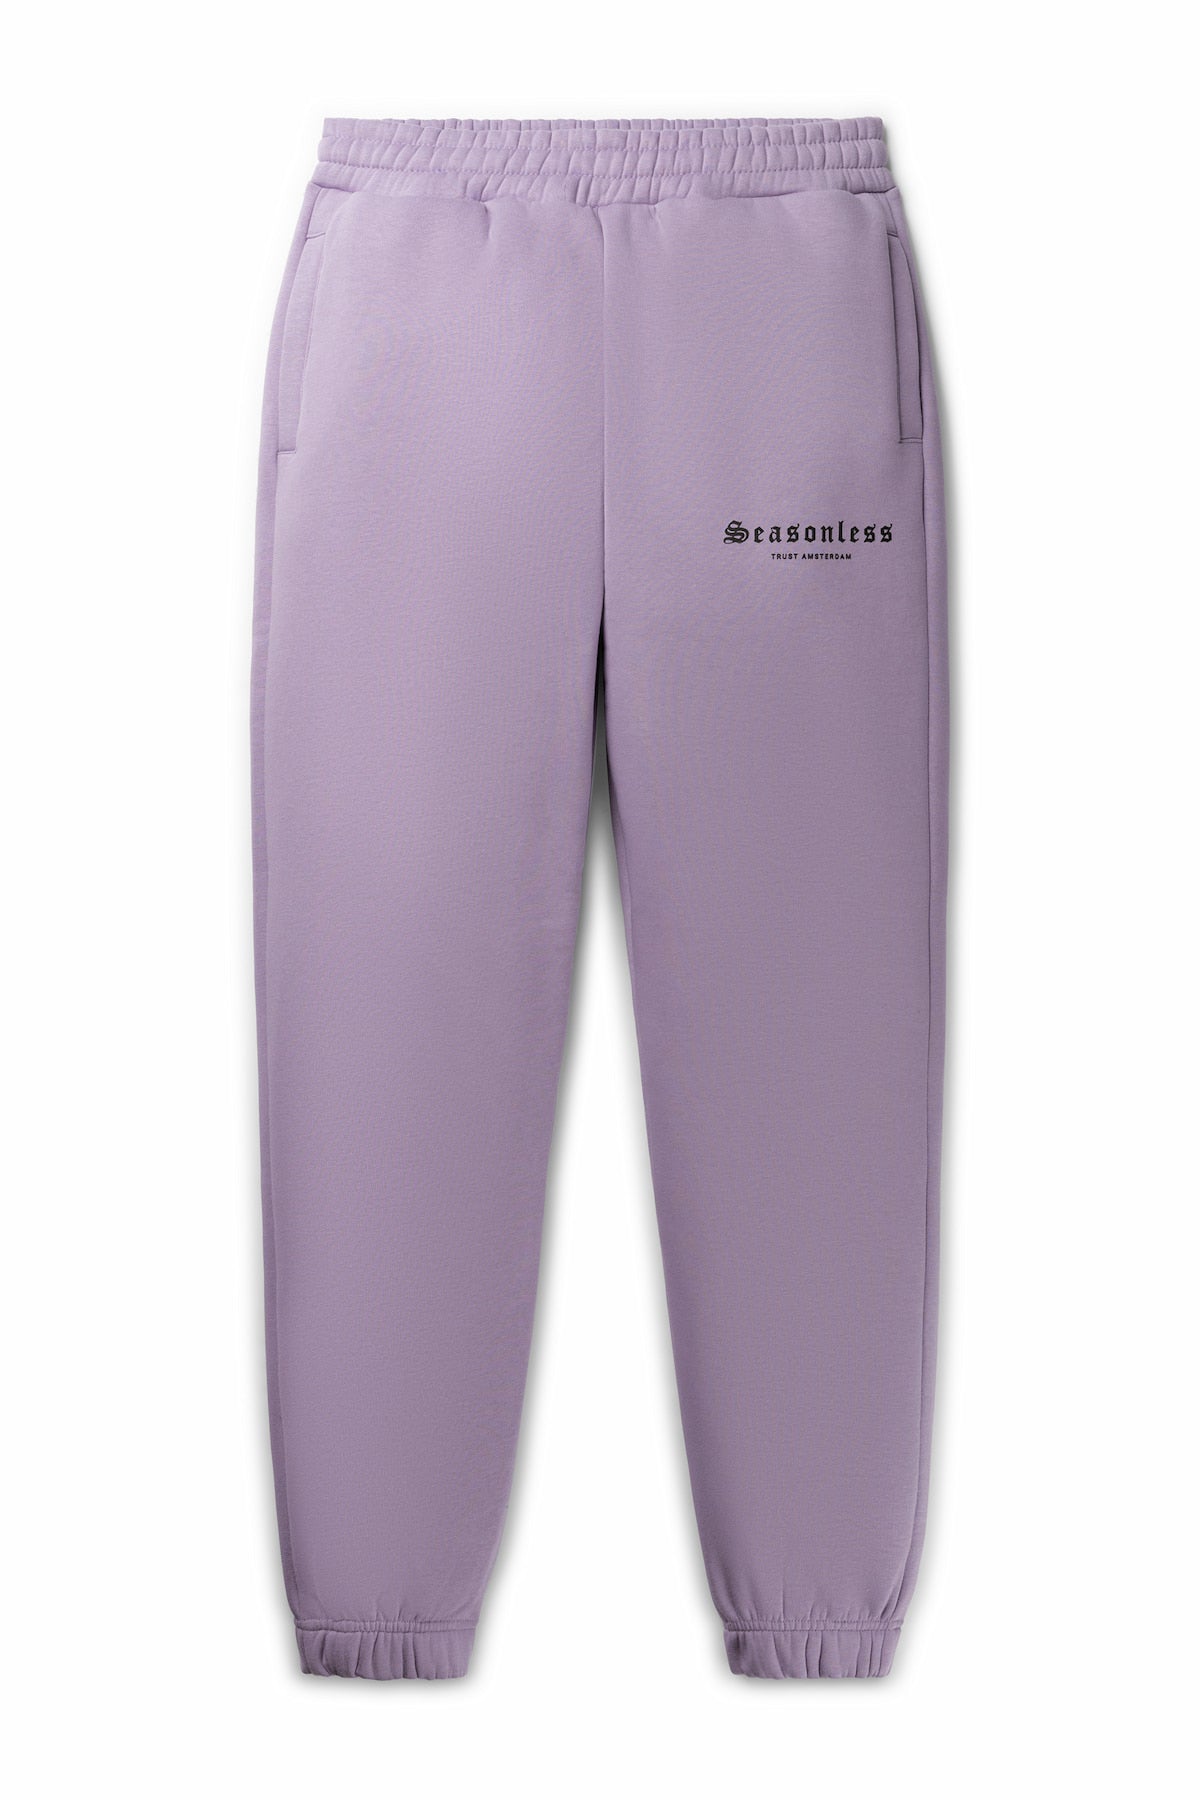 Seasonless Sweatpants - Pink